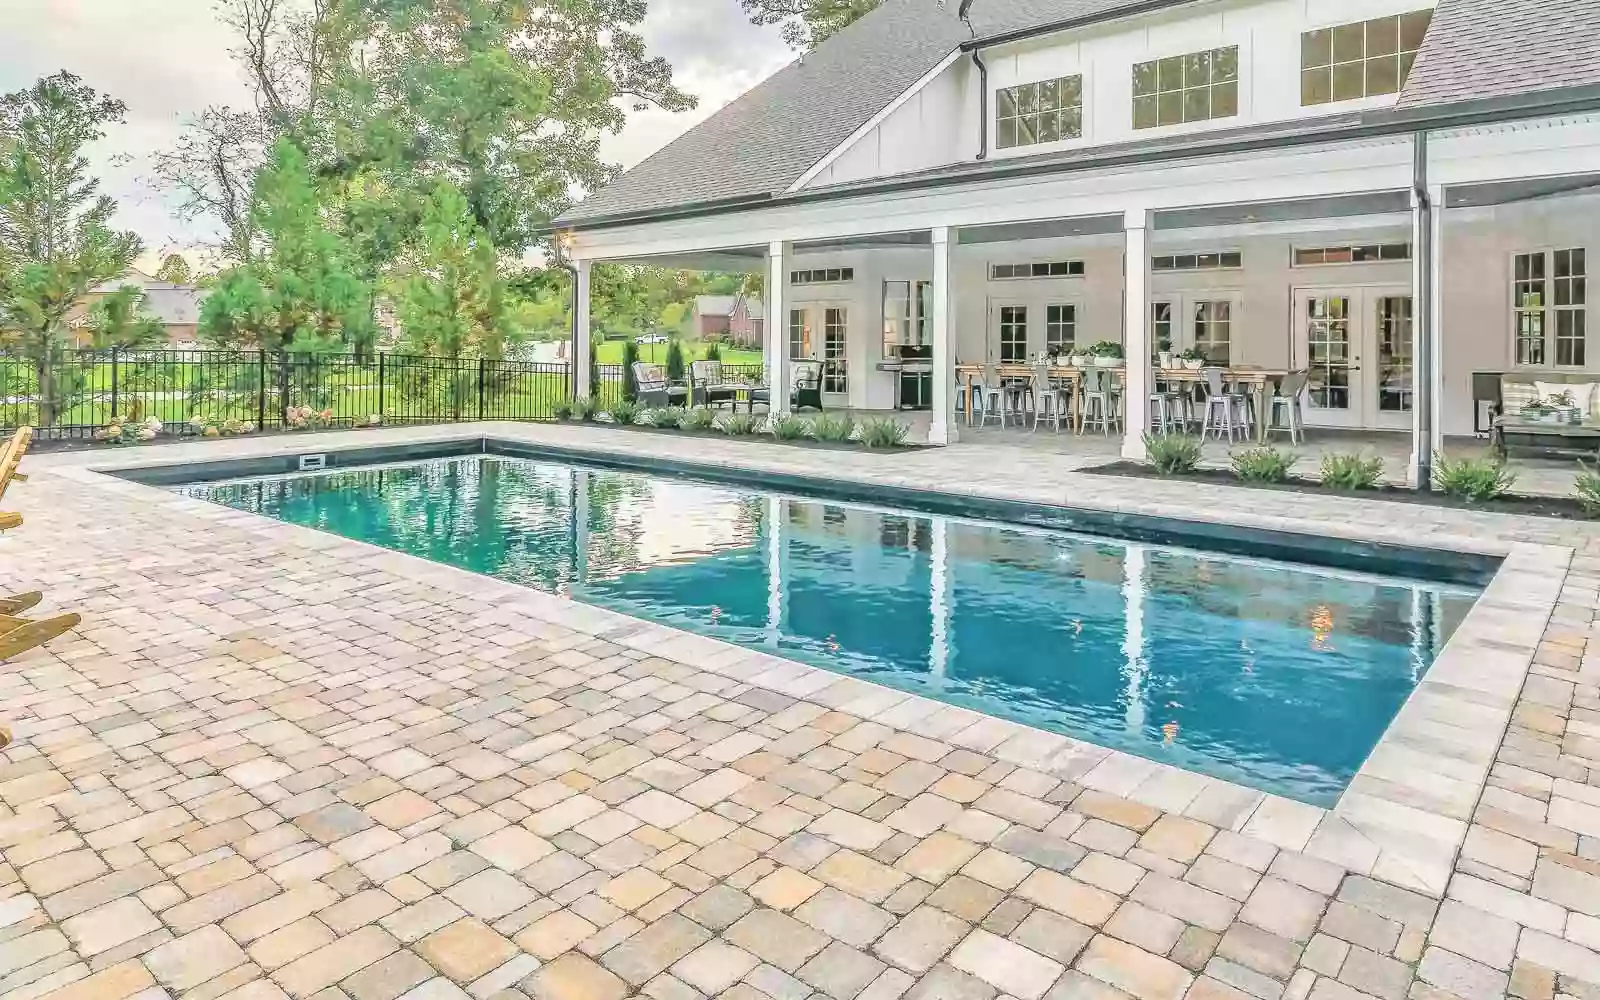 Backyard Paradise Pools LLC